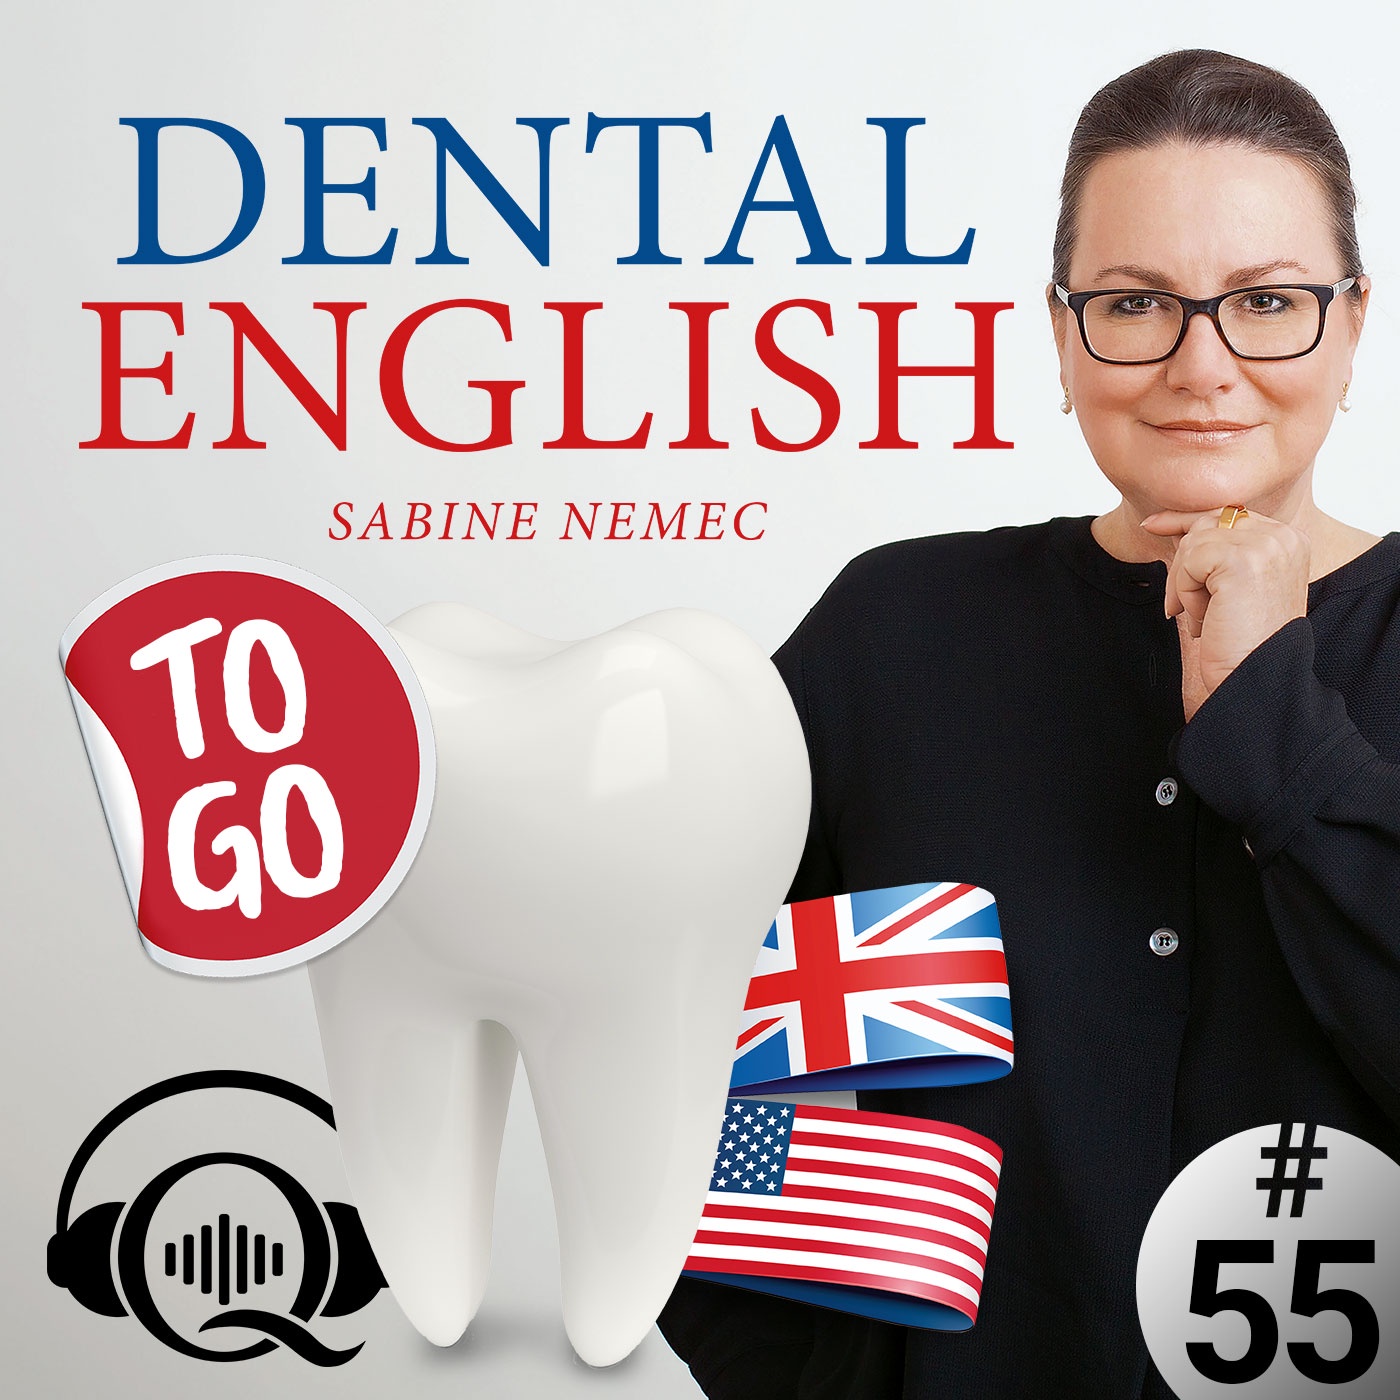 #55 Prothesenpflege – Denture Care and Maintenance